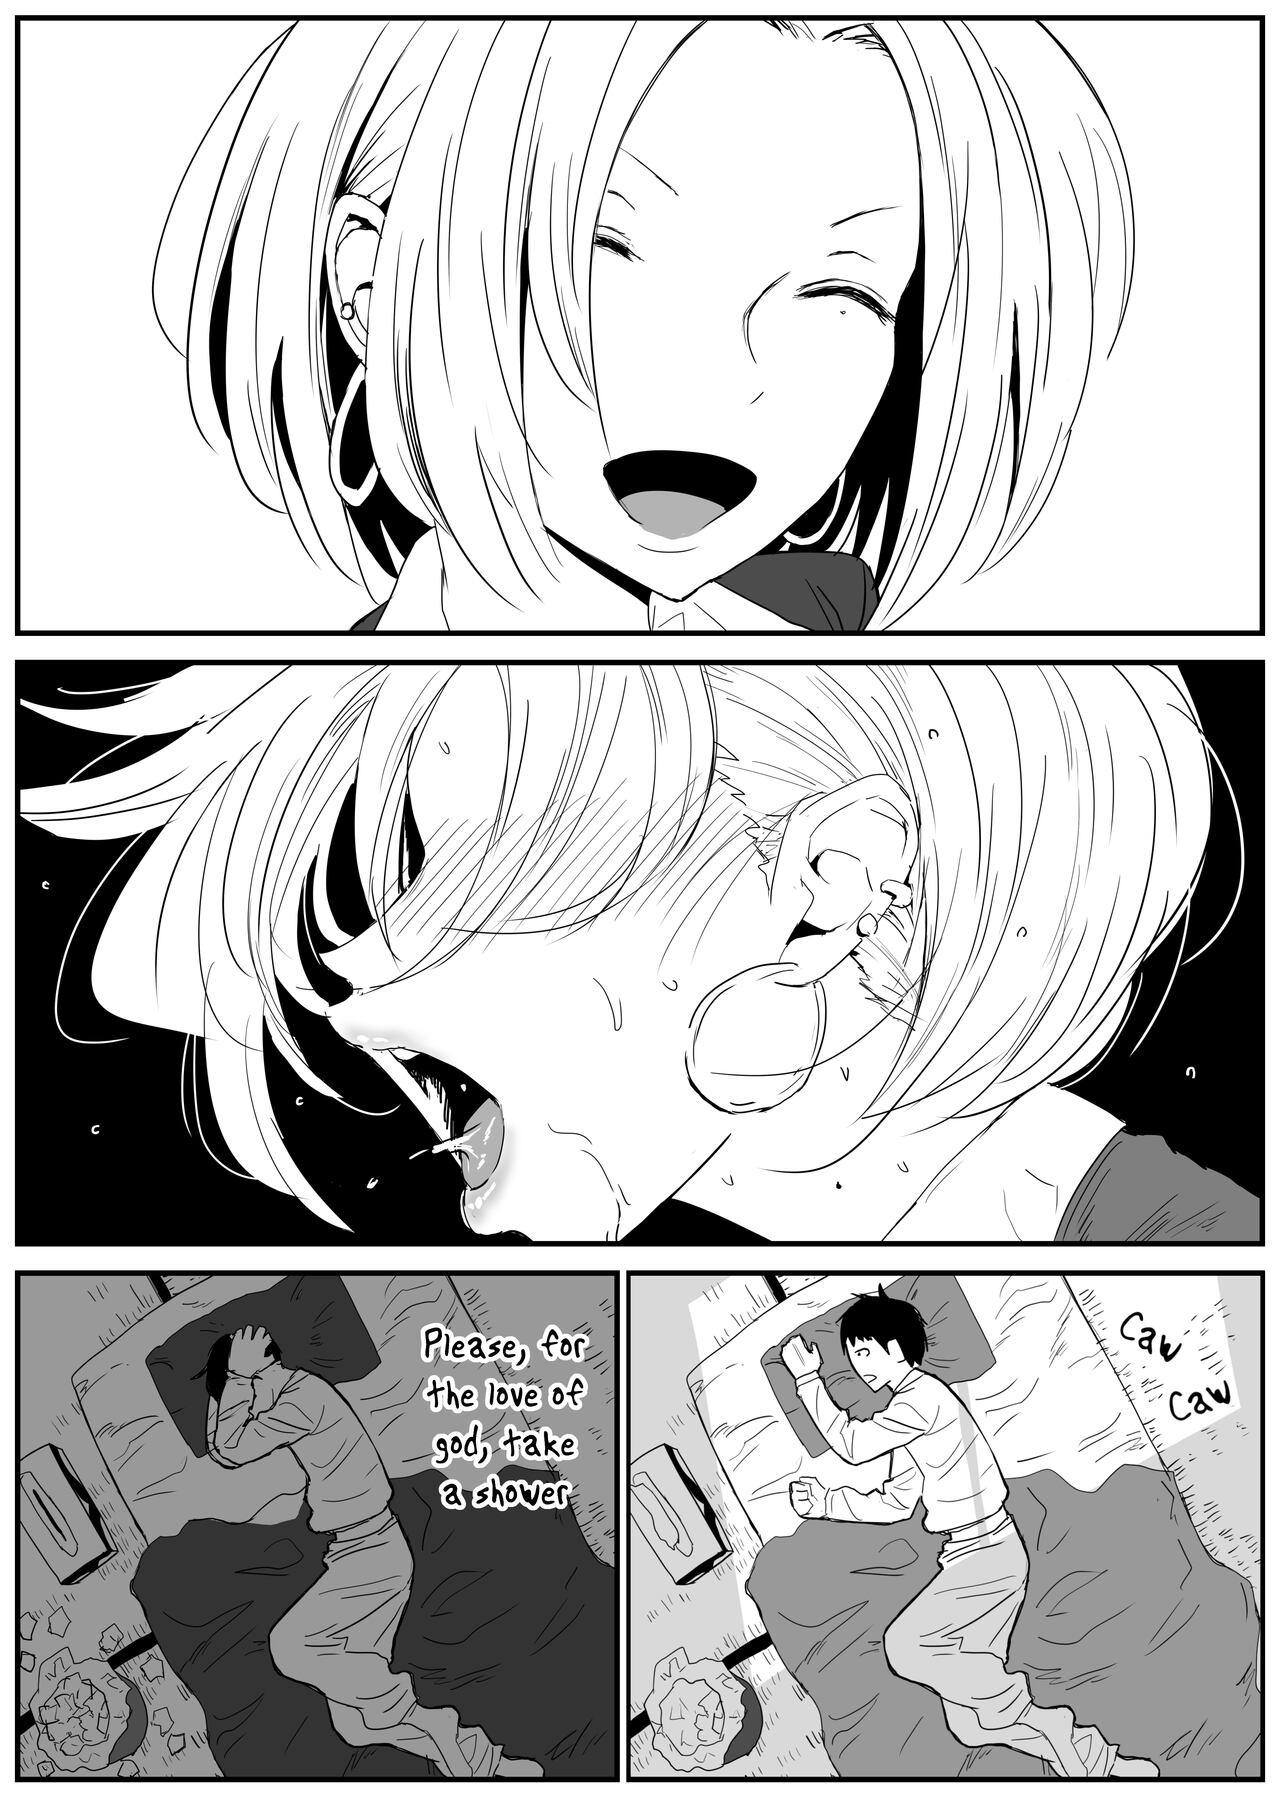 Gyaru JK Ero Manga Chapter 1-5 17